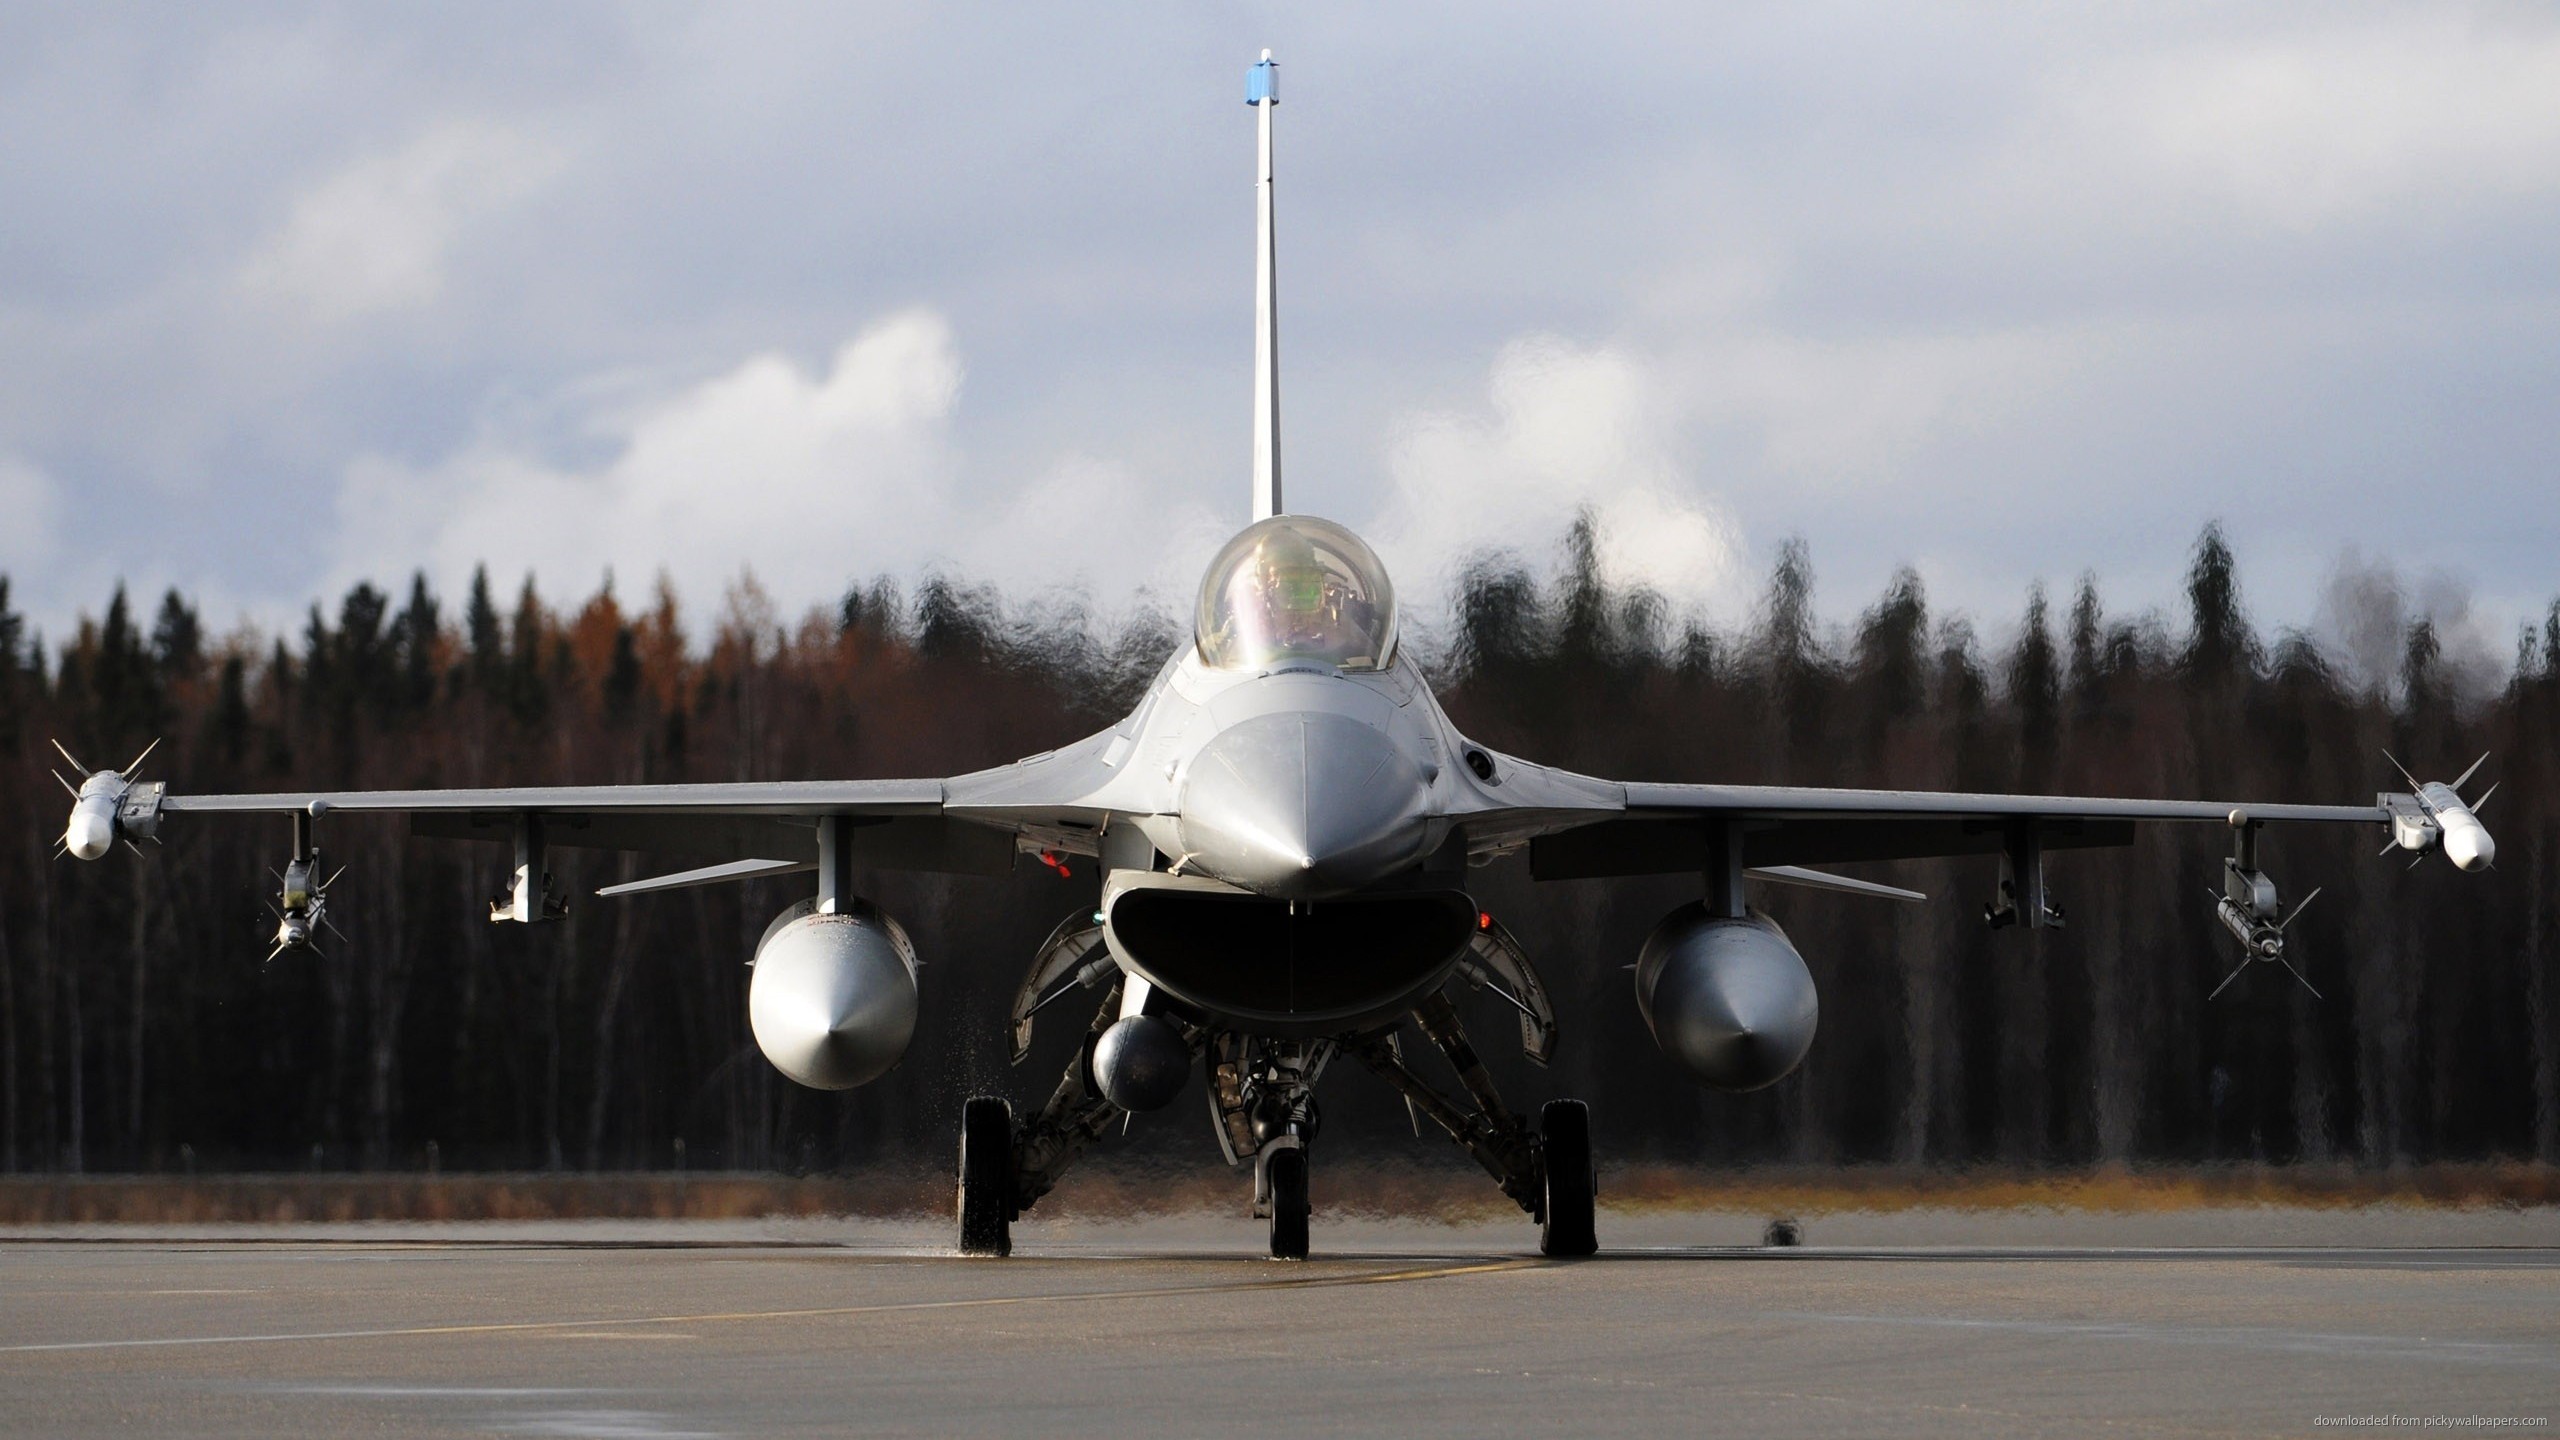 2560x1440 f-16-fighting-falcon-at-runway-front-view.jpg (2560Ã1440) | F16 Fighter |  Pinterest | Falcons, City wallpaper and Military aircraft